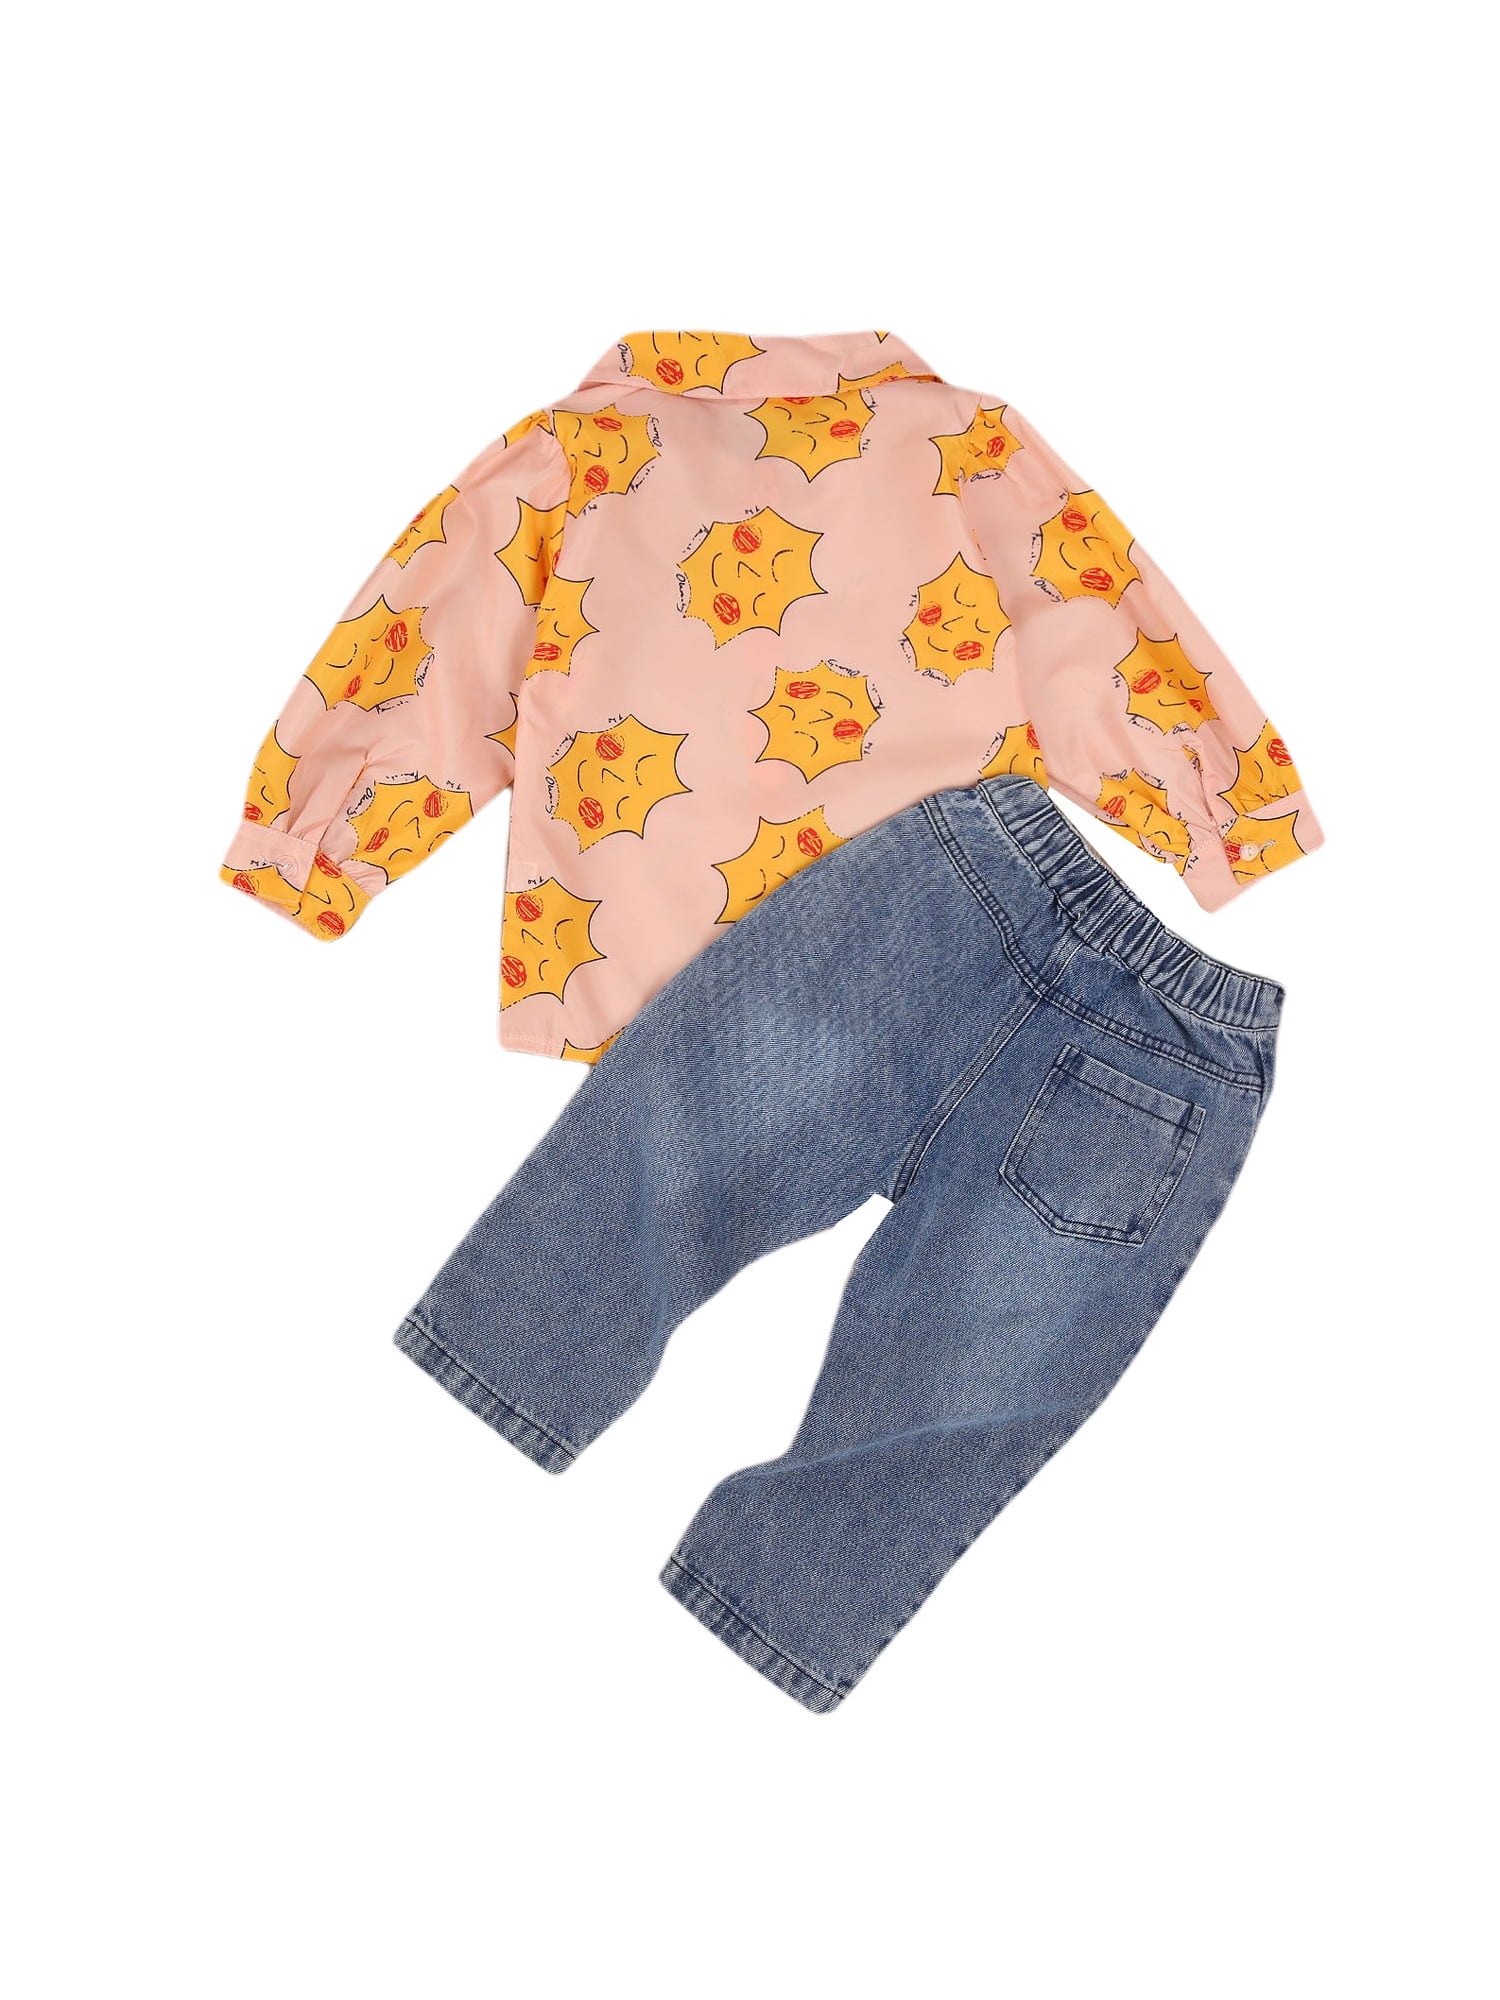 18 Months-5T Toddler Baby Girls Fashion 2pcs Clothes Set Letter Cartoon Print Tops T Shirt Denim Jeans Pants Outfits